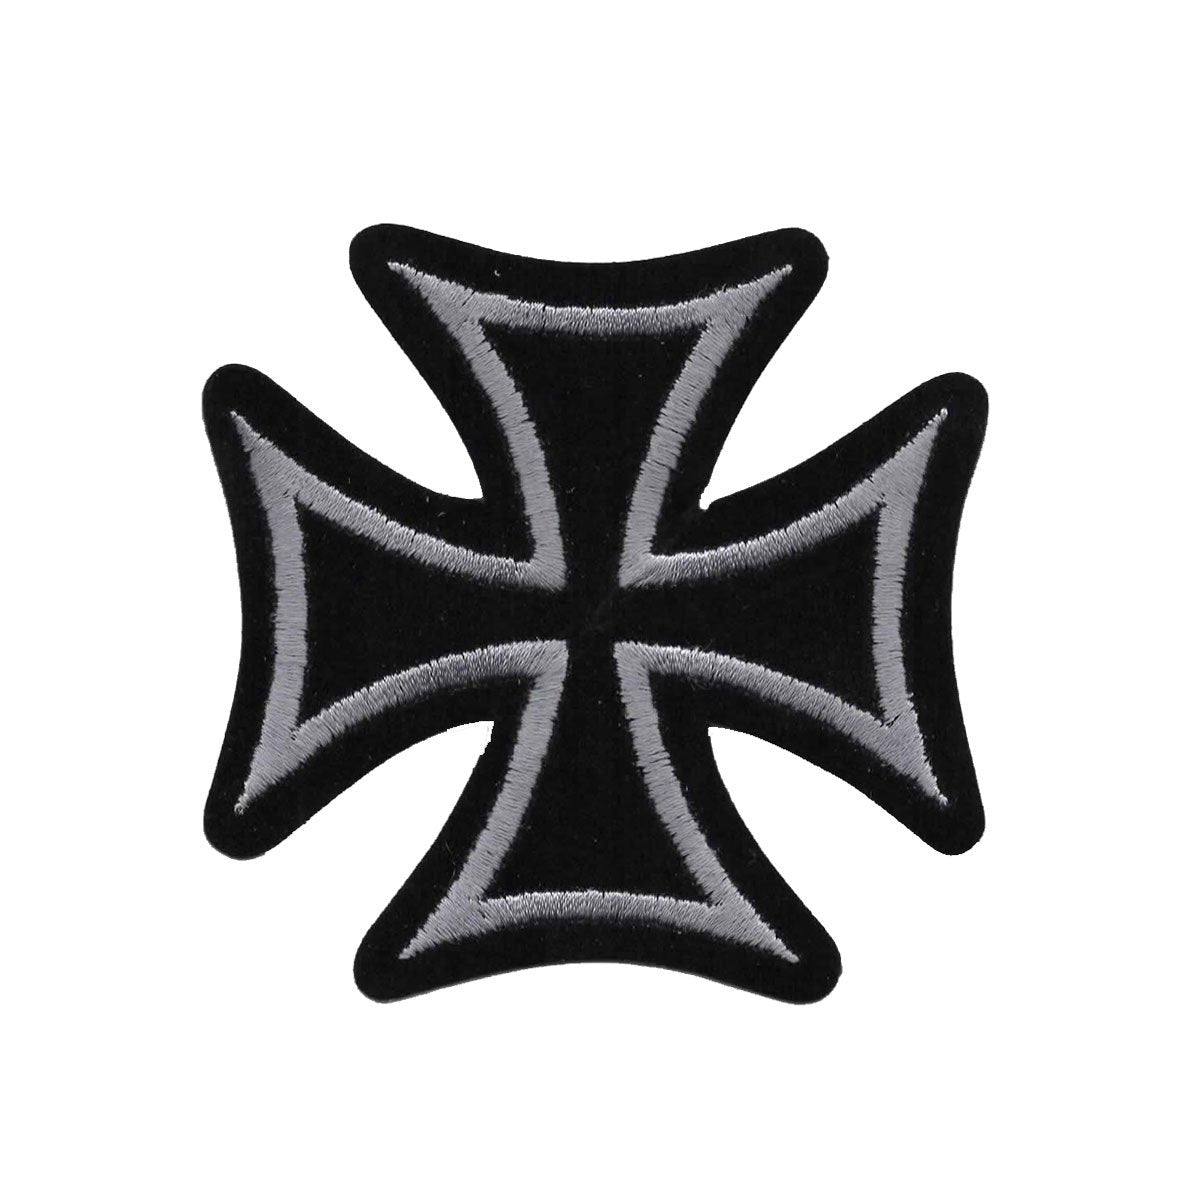 Black Iron Cross Patch New – Rock N Sport Store